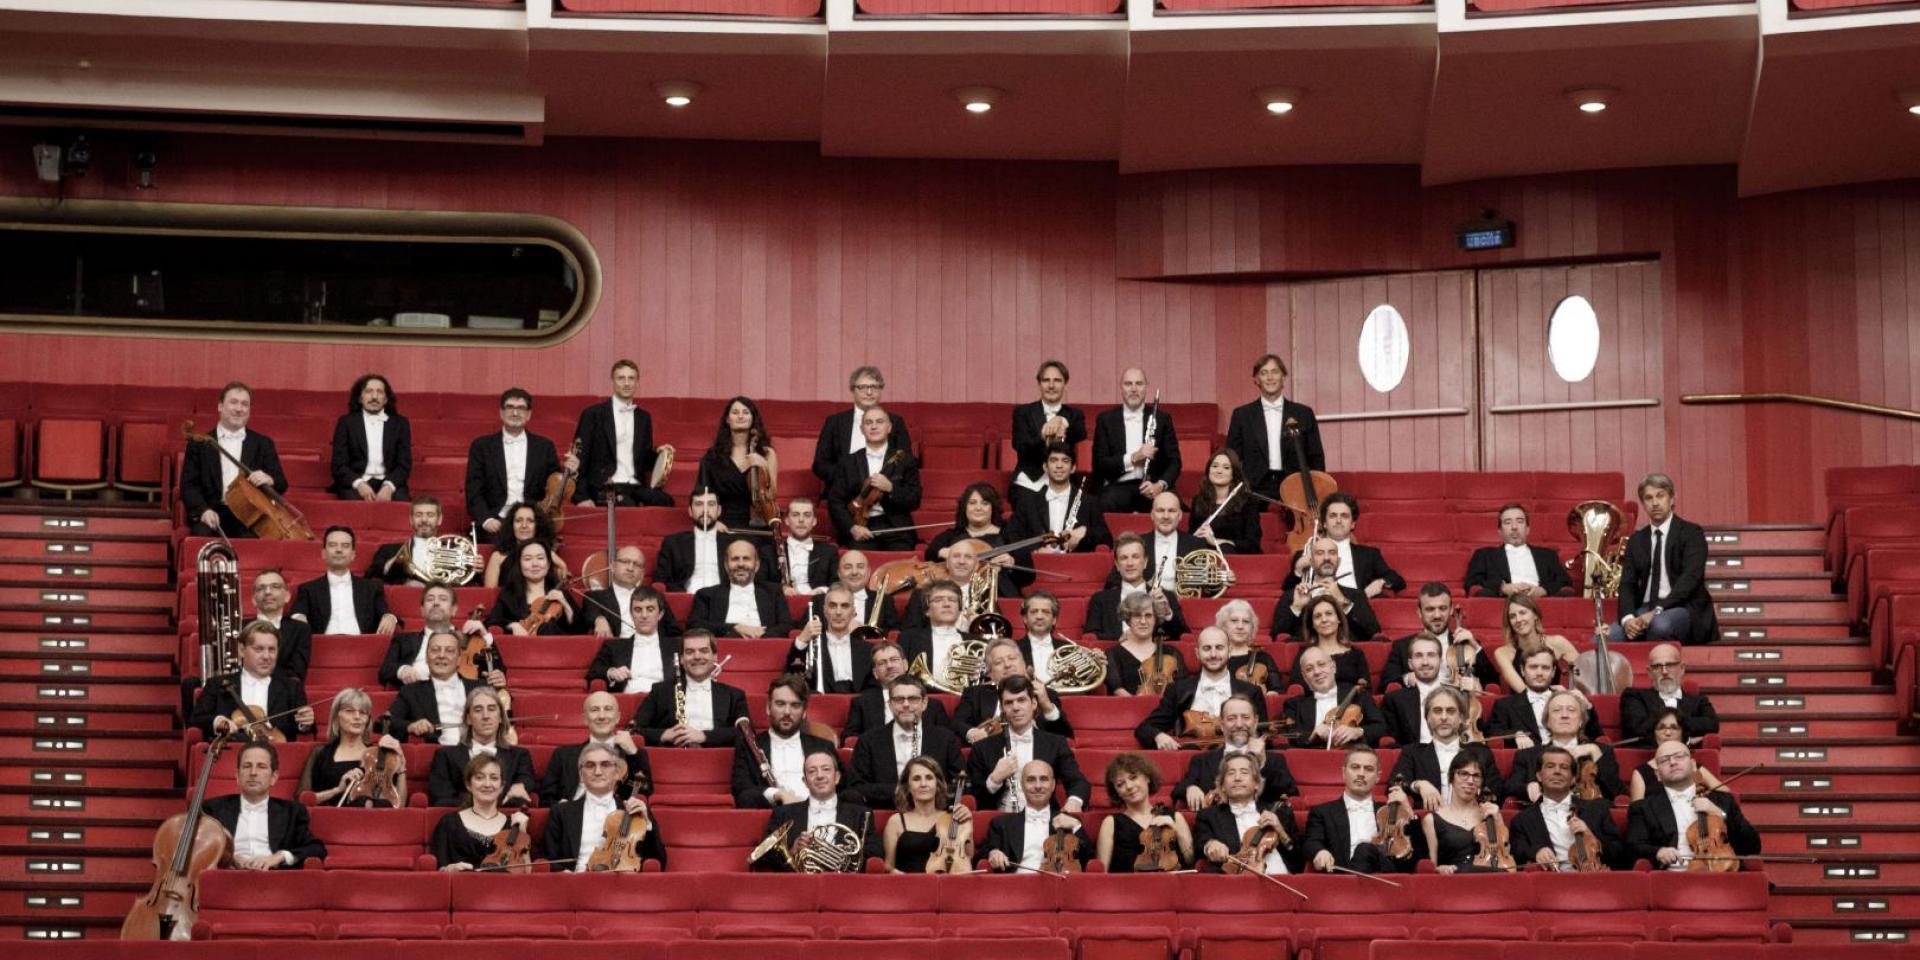 Orchestra Teatro Regio © Edoardo Piva